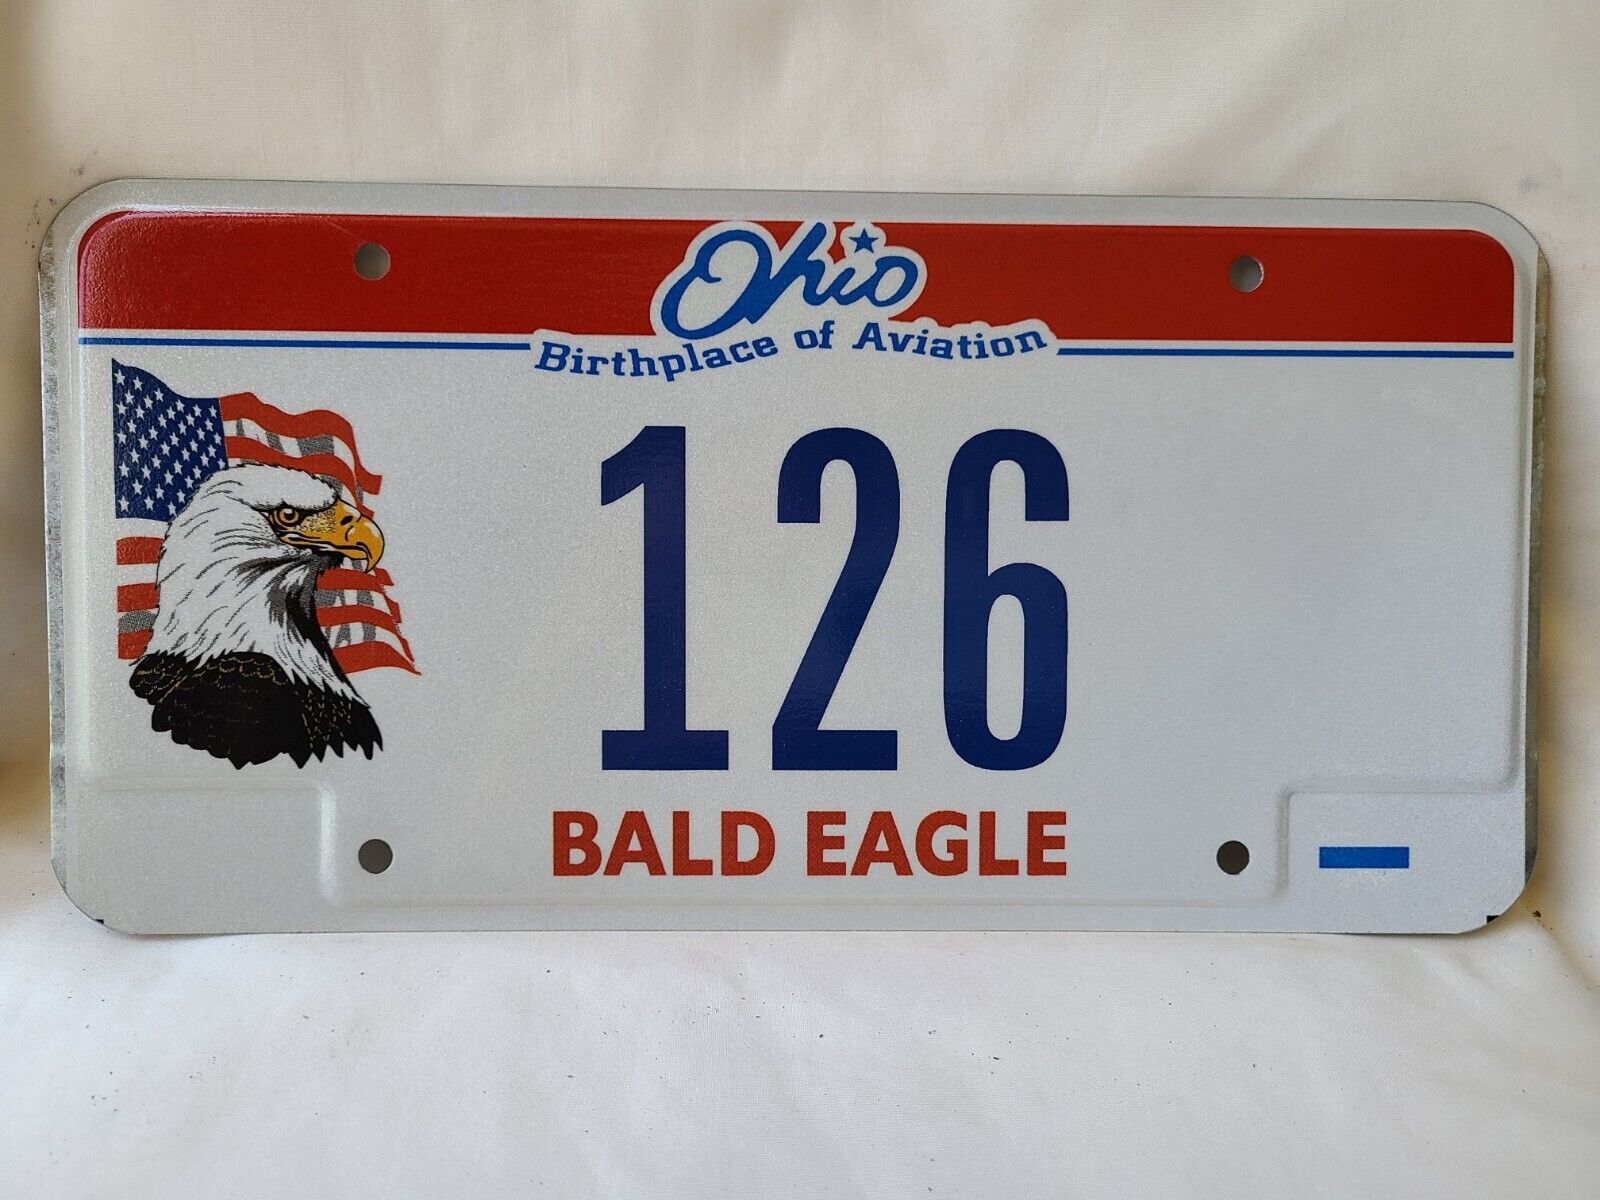 Vintage 2012 Ohio Birthplace of Aviation Bald Eagle 126 License Plate 9222